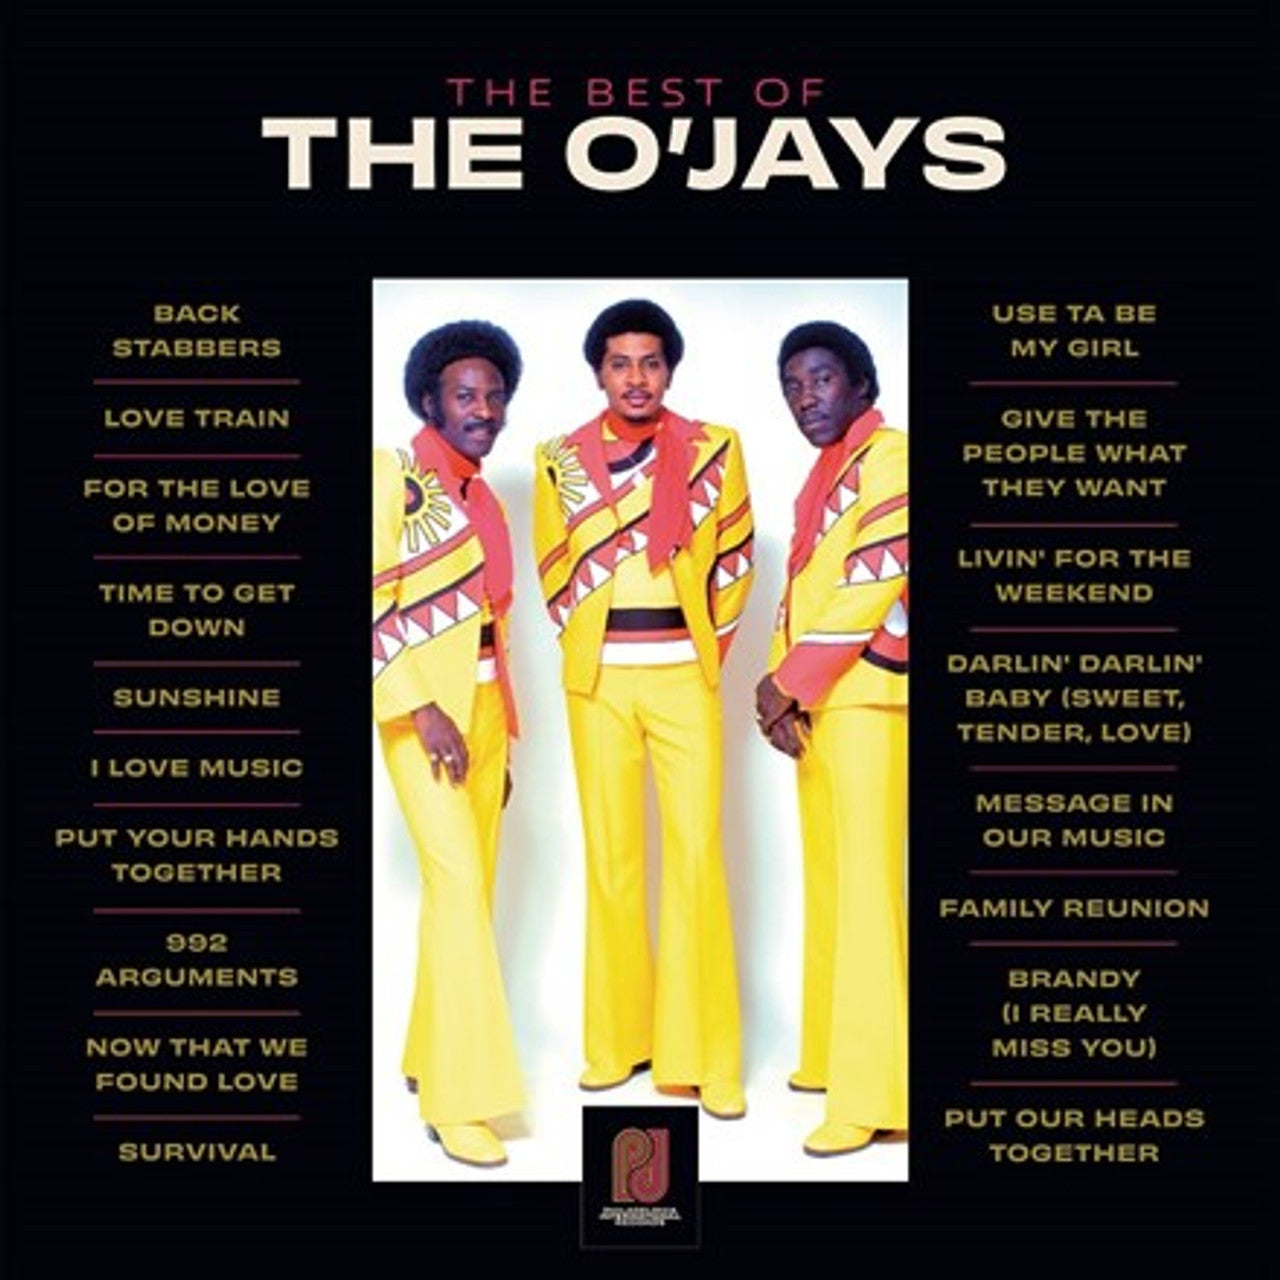 THE O'JAYS - THE BEST OF THE O'JAYS - 2-LP - VINYL LP